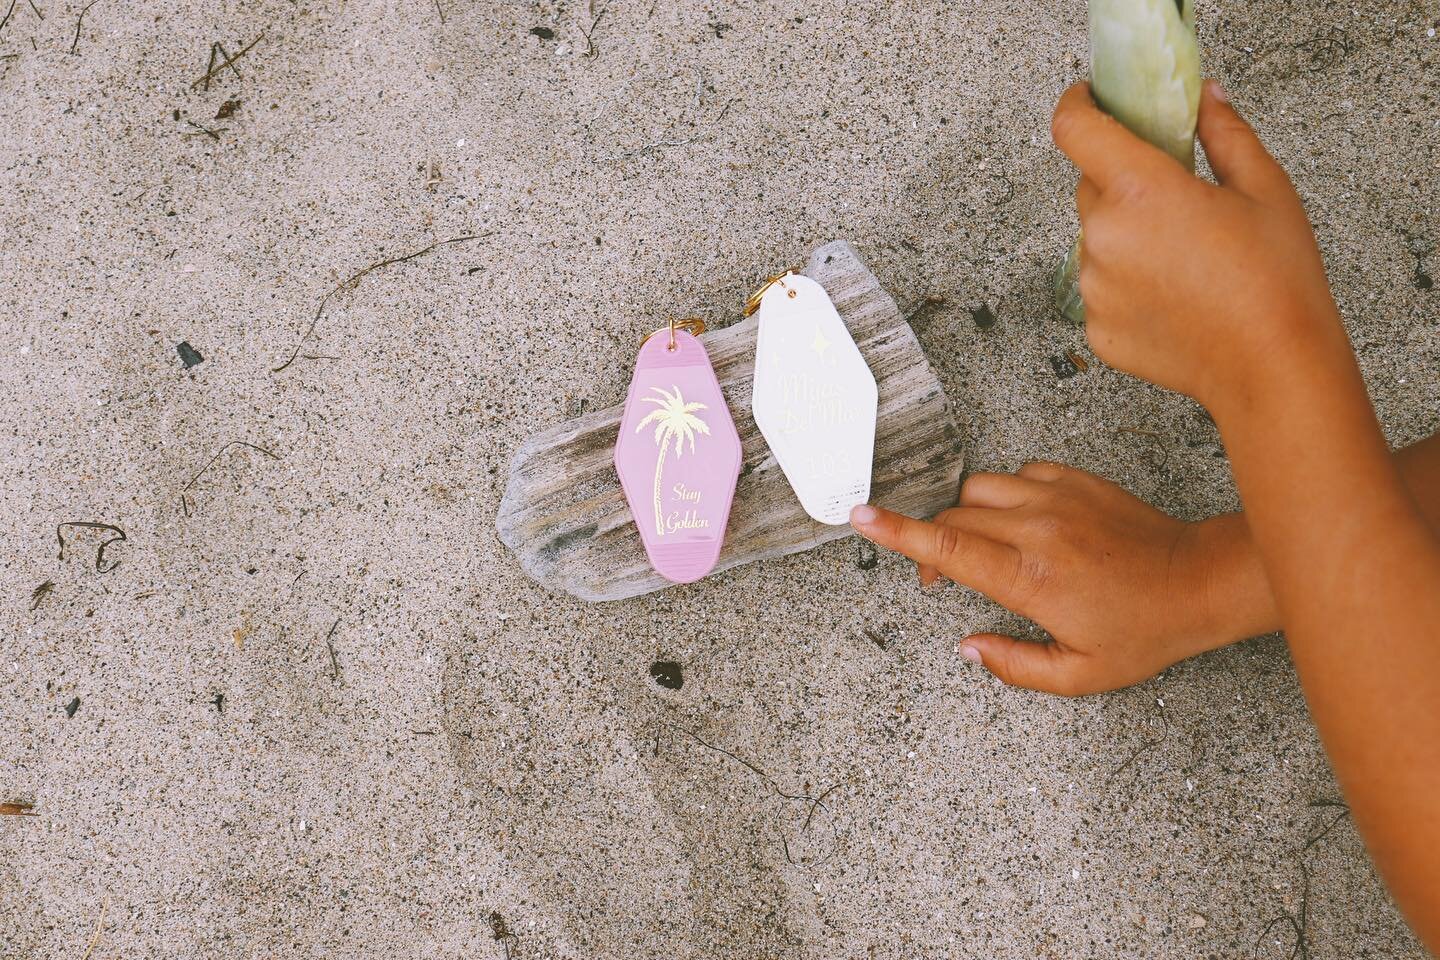 Finders keepers 👀🤍 

#mijasdelmar #california #surf #surfergirl #surfculture #backtoschool #keychain